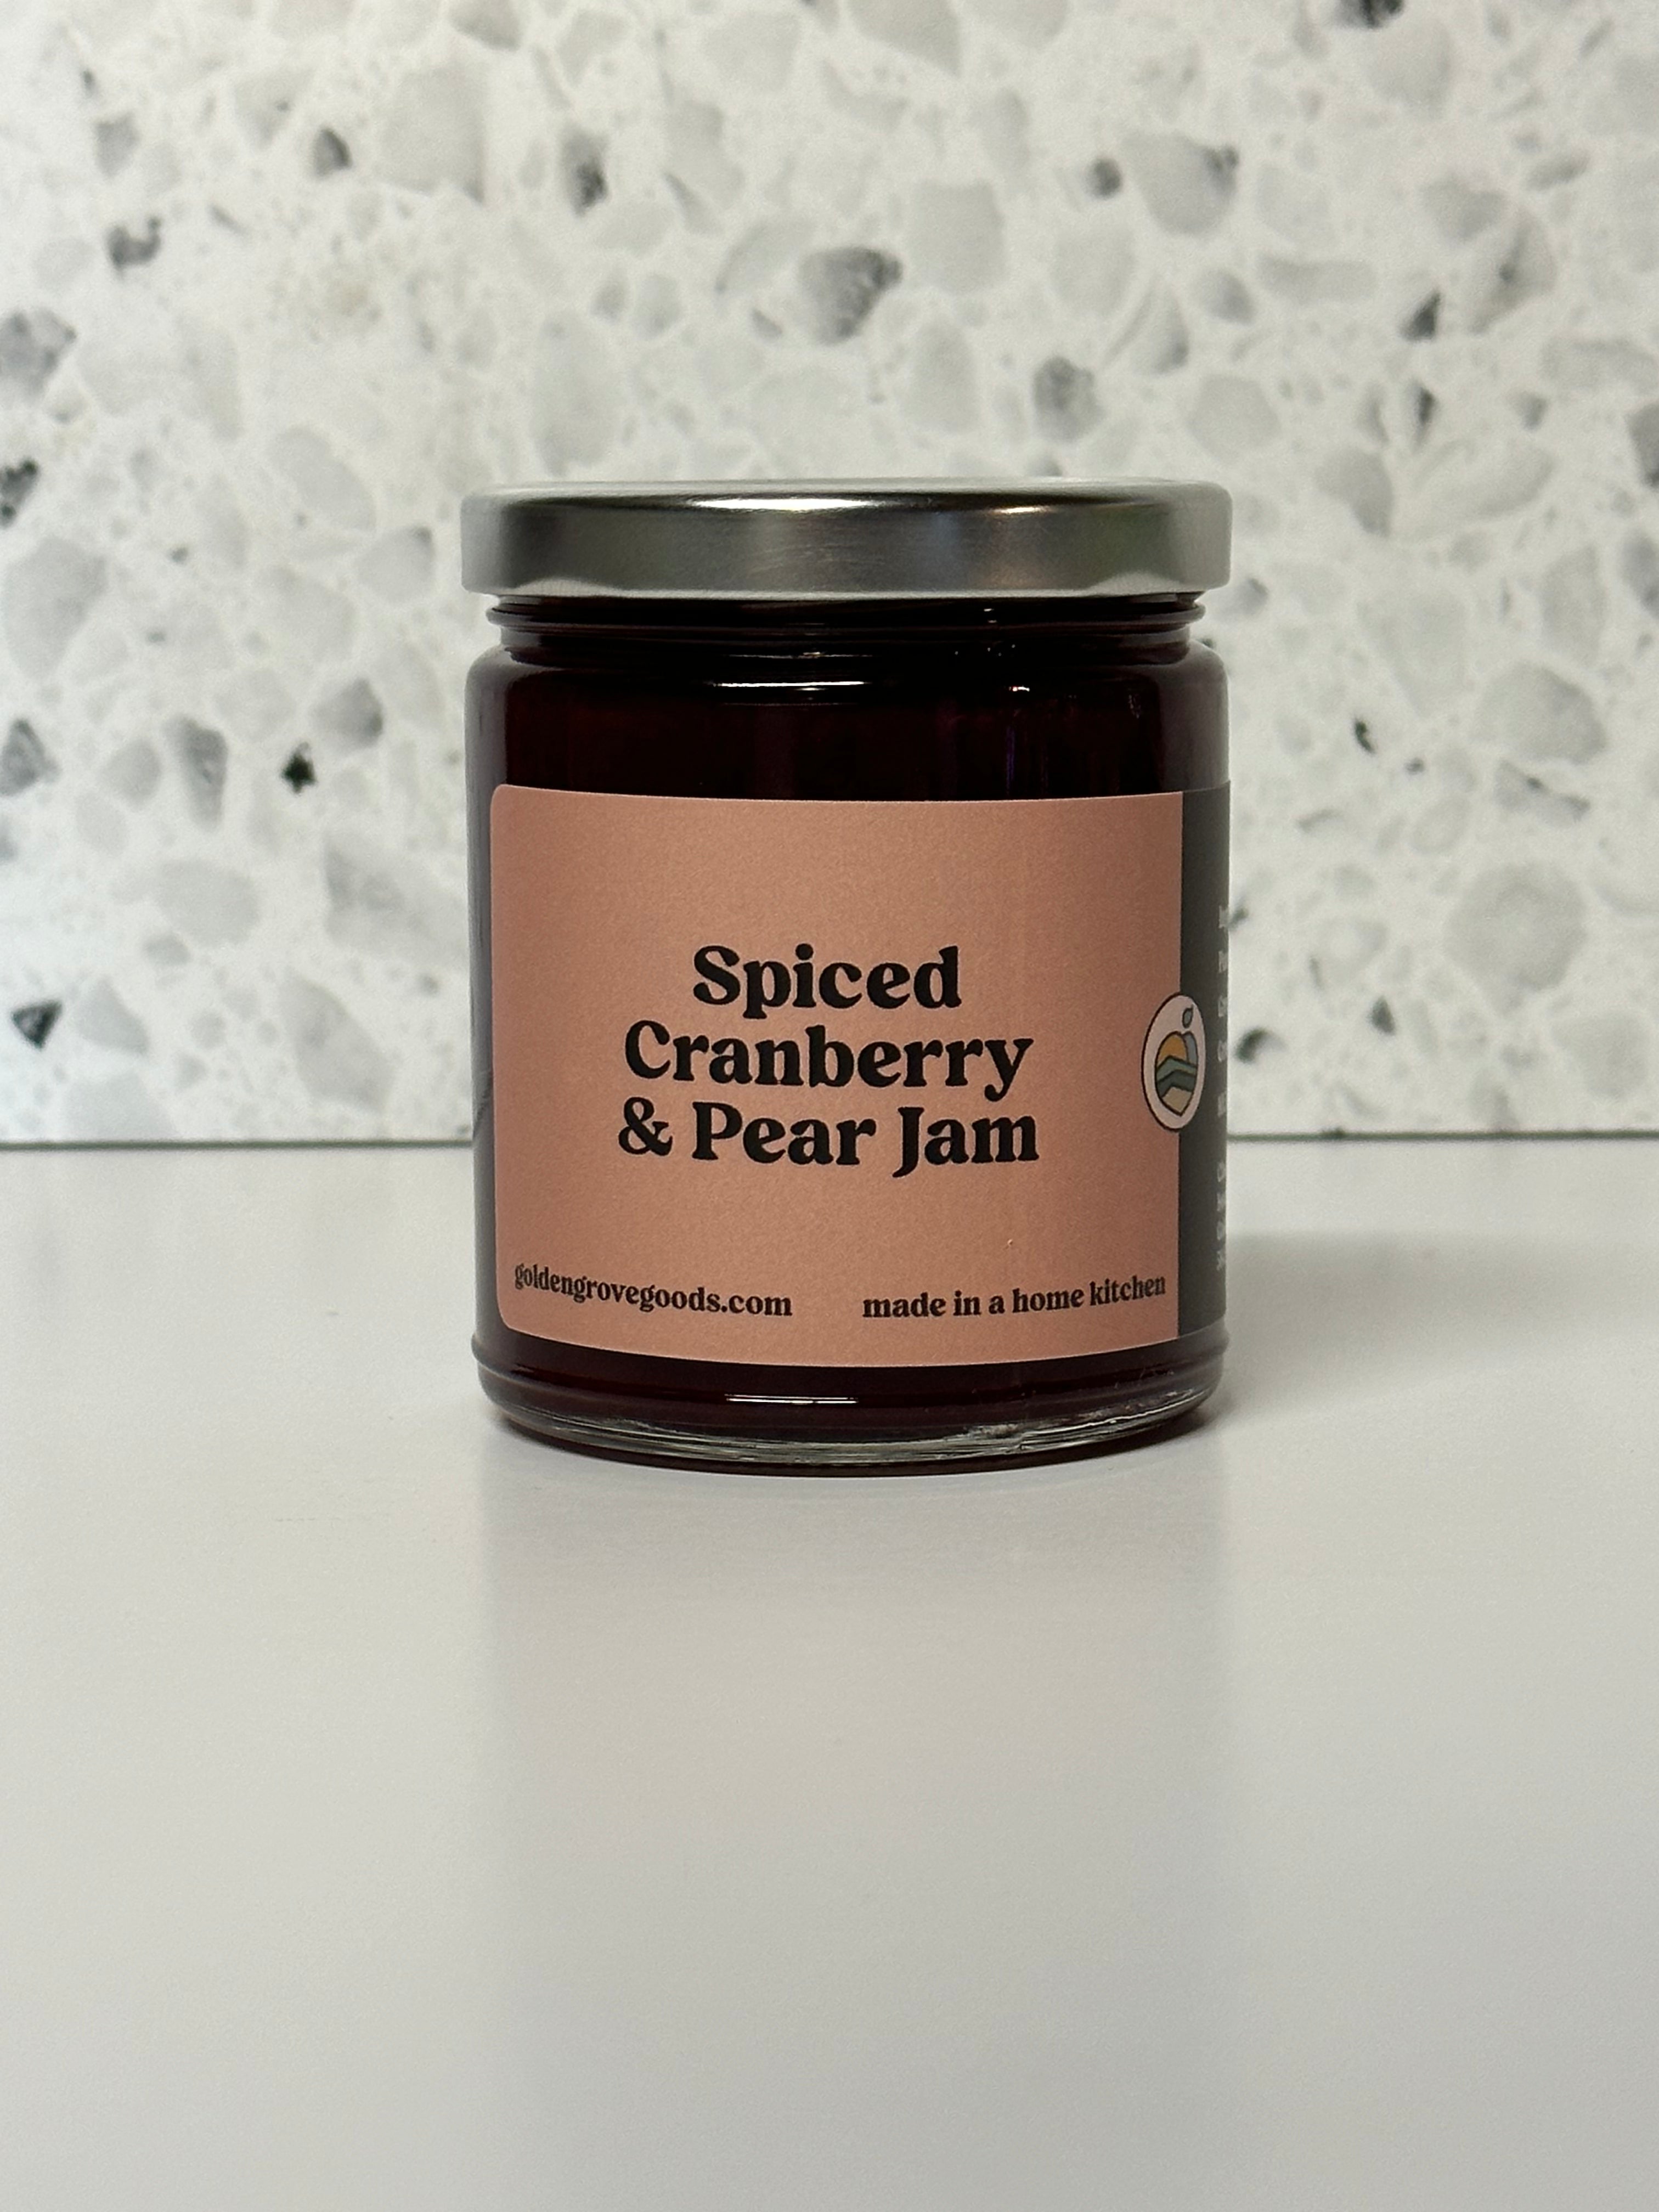 Spiced Cranberry & Pear Jam